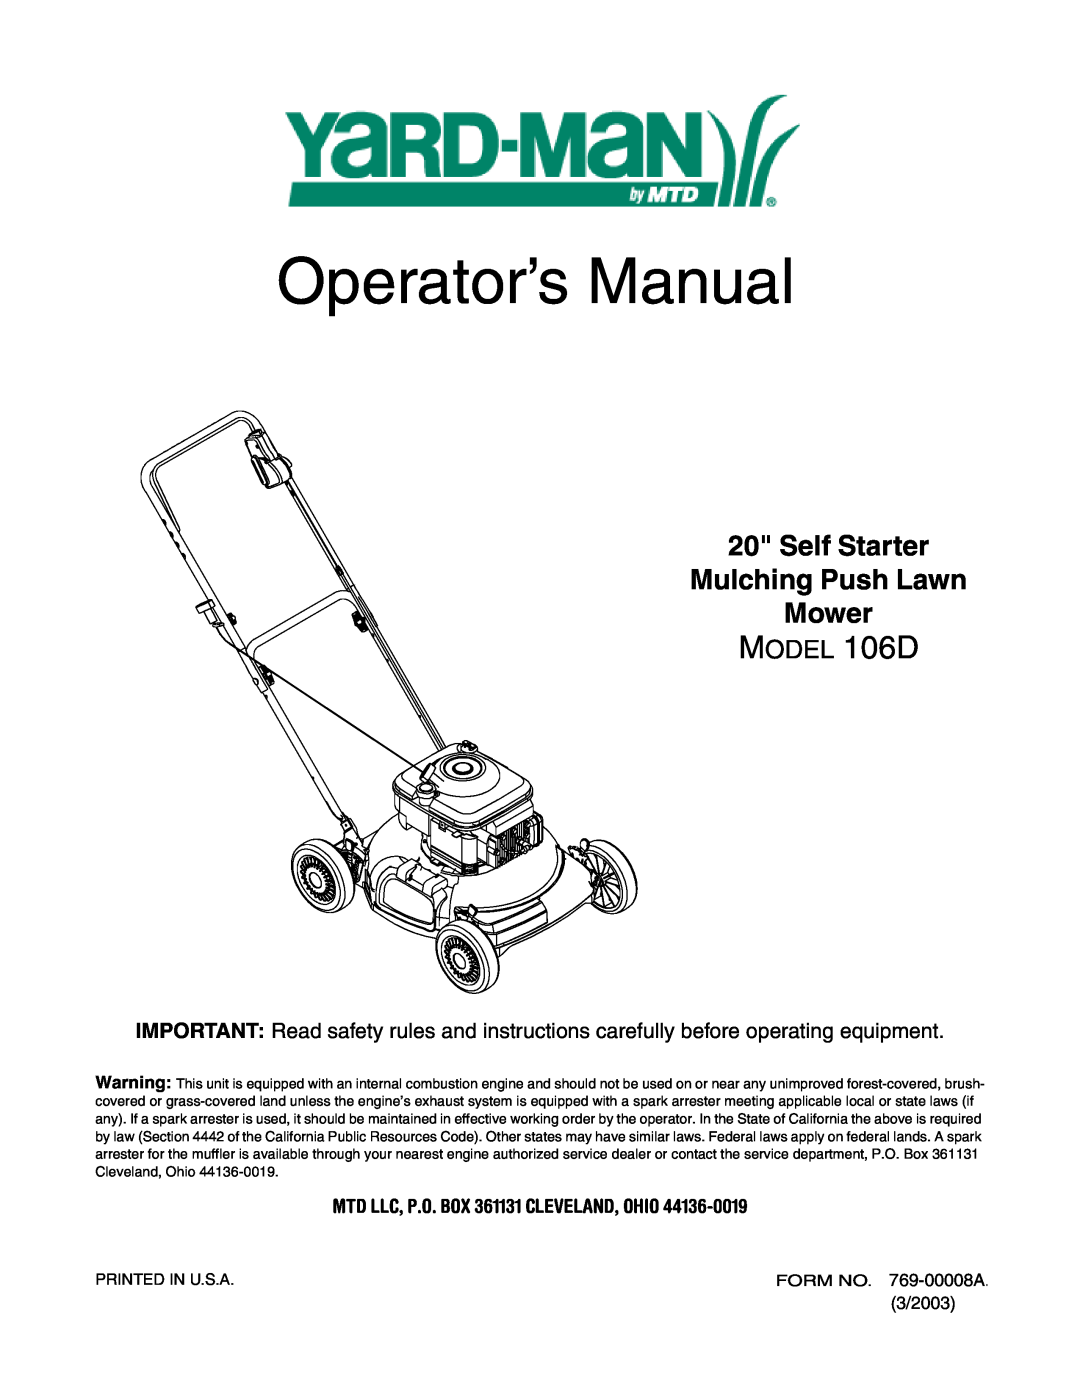 Yard-Man manual MODEL 106D, MTD LLC, P.O. BOX 361131 CLEVELAND, OHIO, Operator’s Manual 